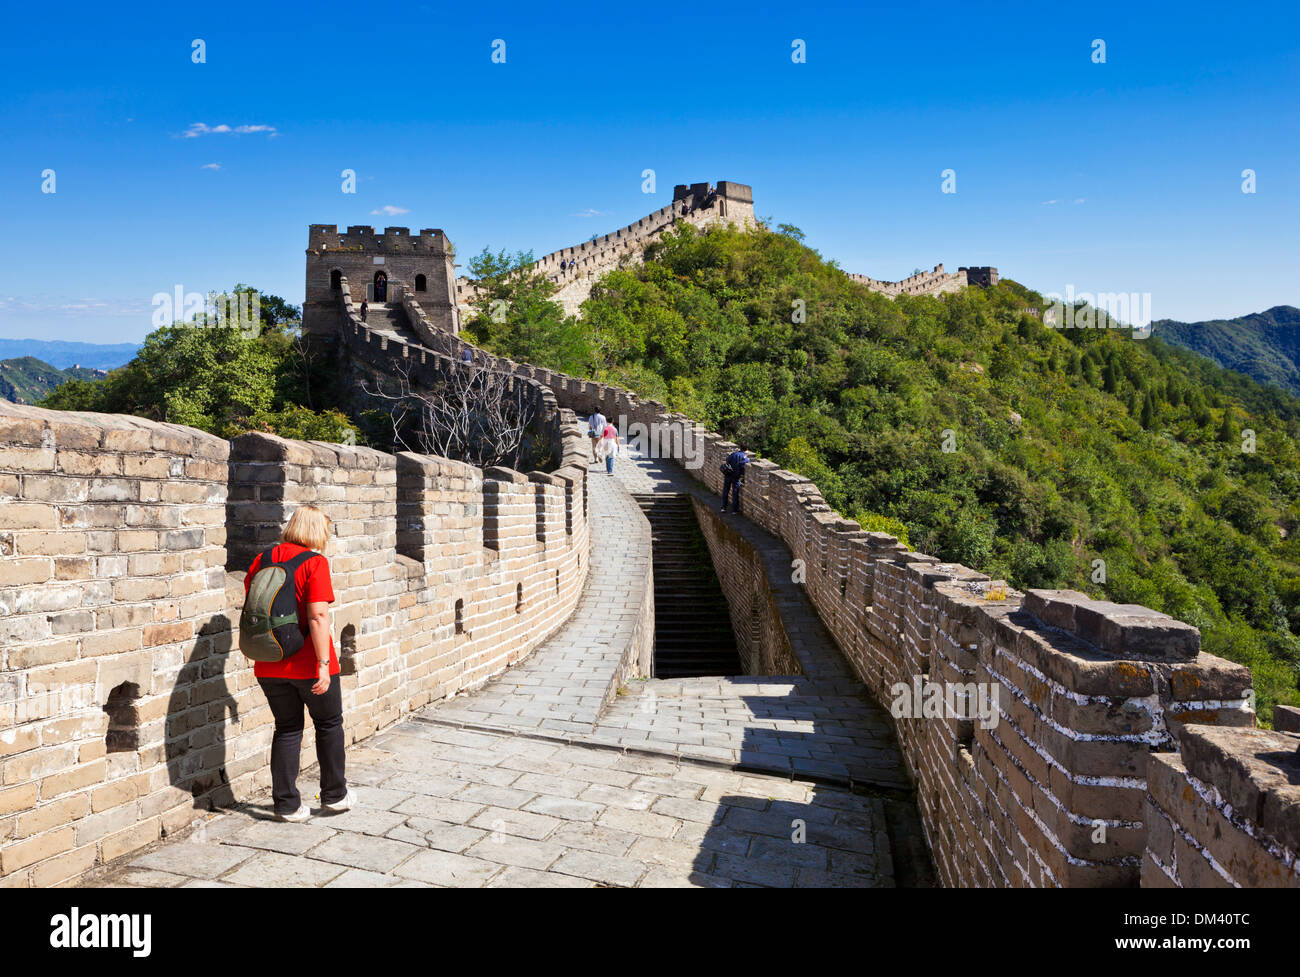 Mujer turista caminar por la Gran Muralla de China, Sitio del Patrimonio Mundial de la UNESCO, Mutianyu, distrito de Beijing, China, Asia Foto de stock